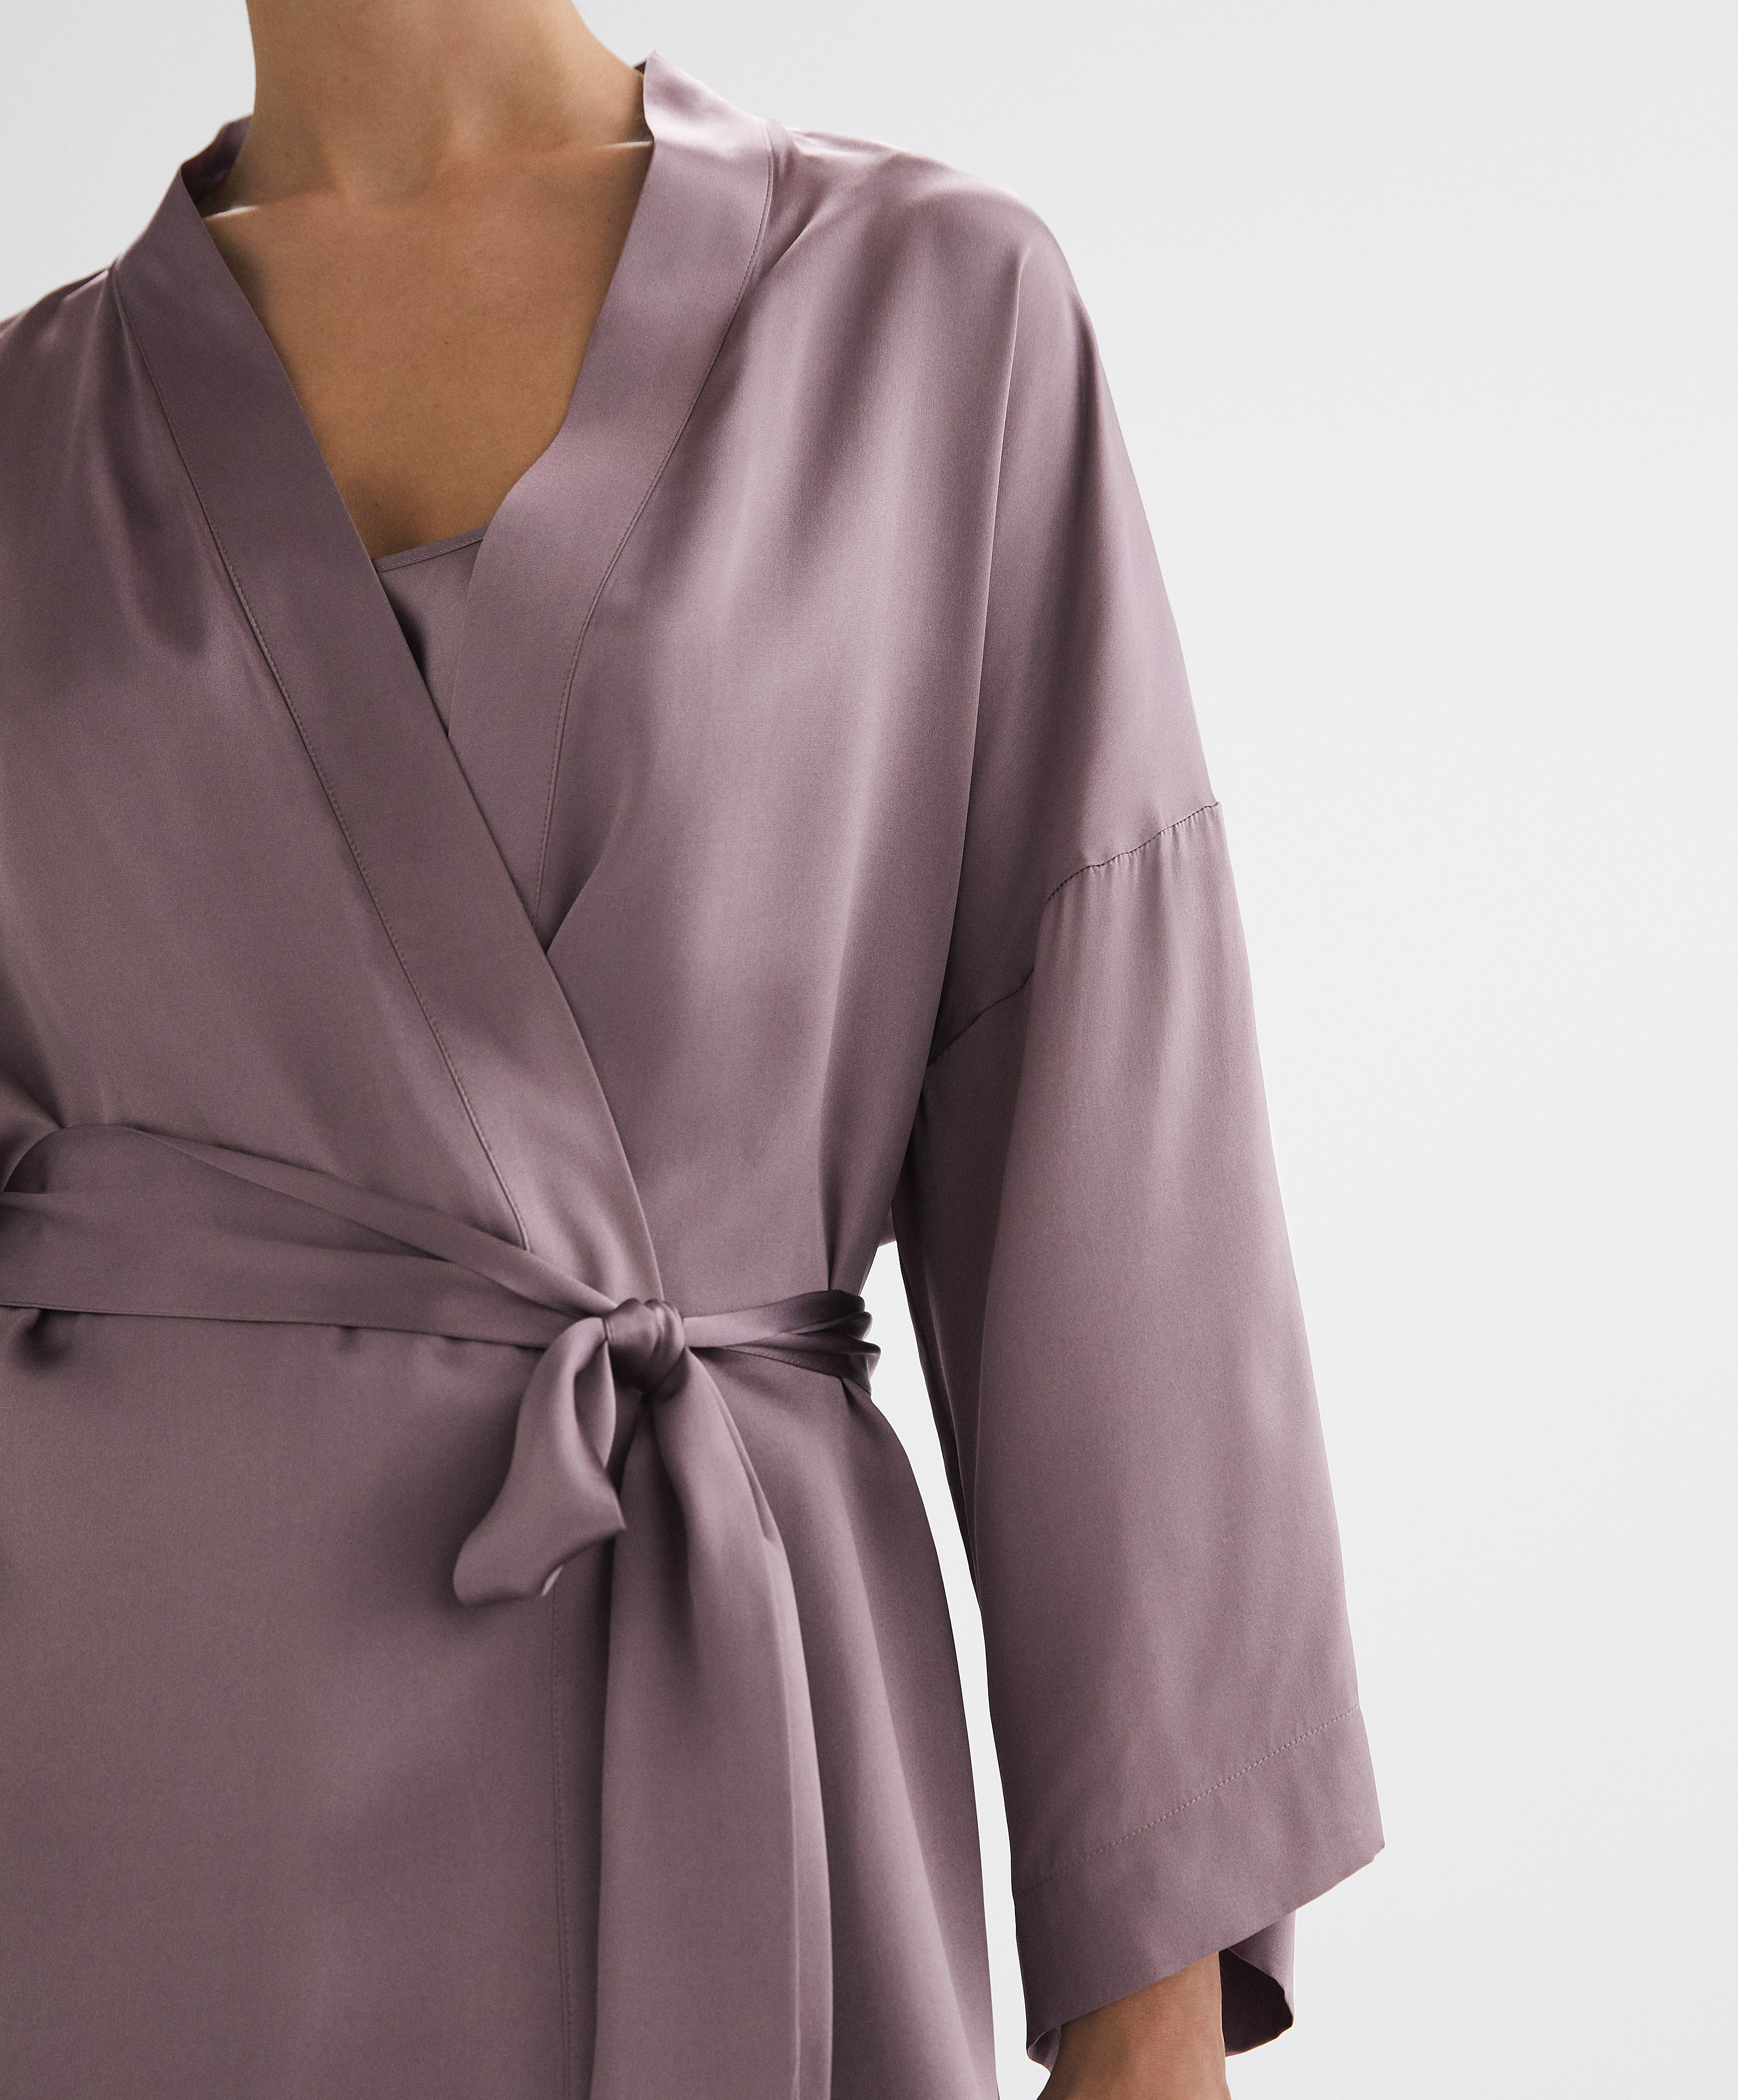 100% silk dressing gown